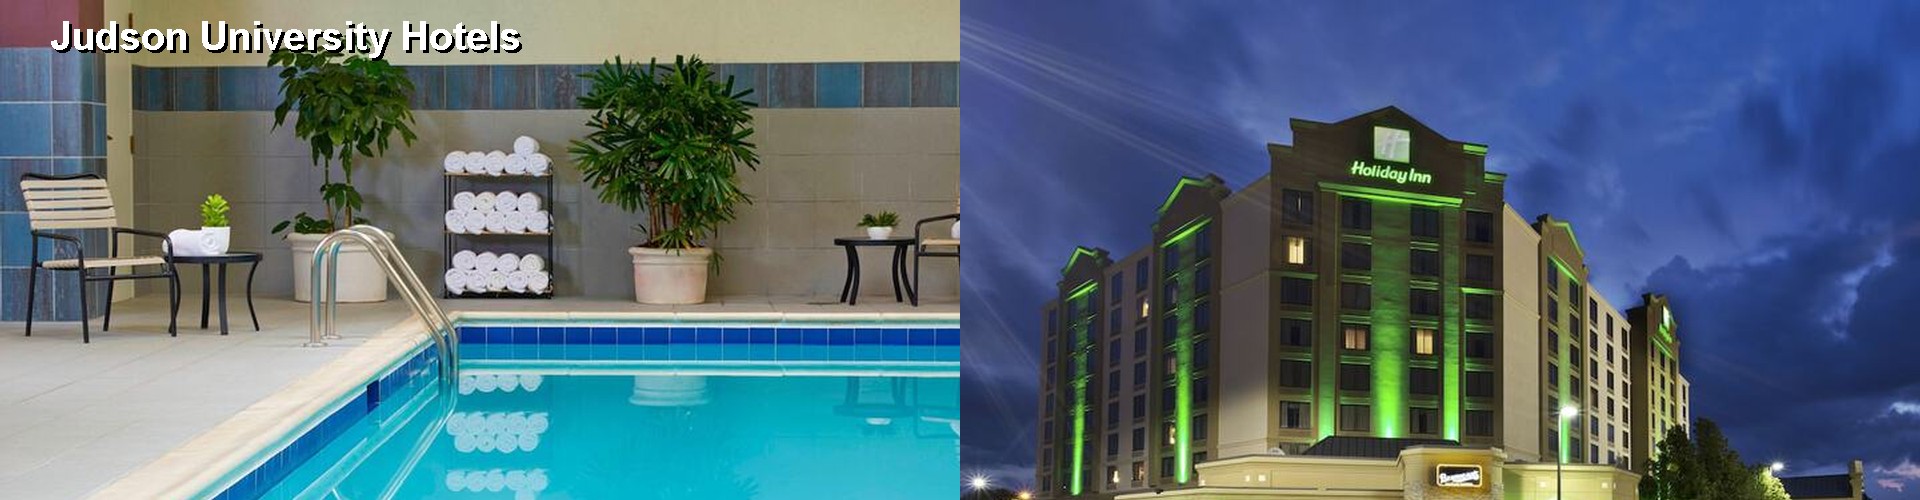 5 Best Hotels near Judson University